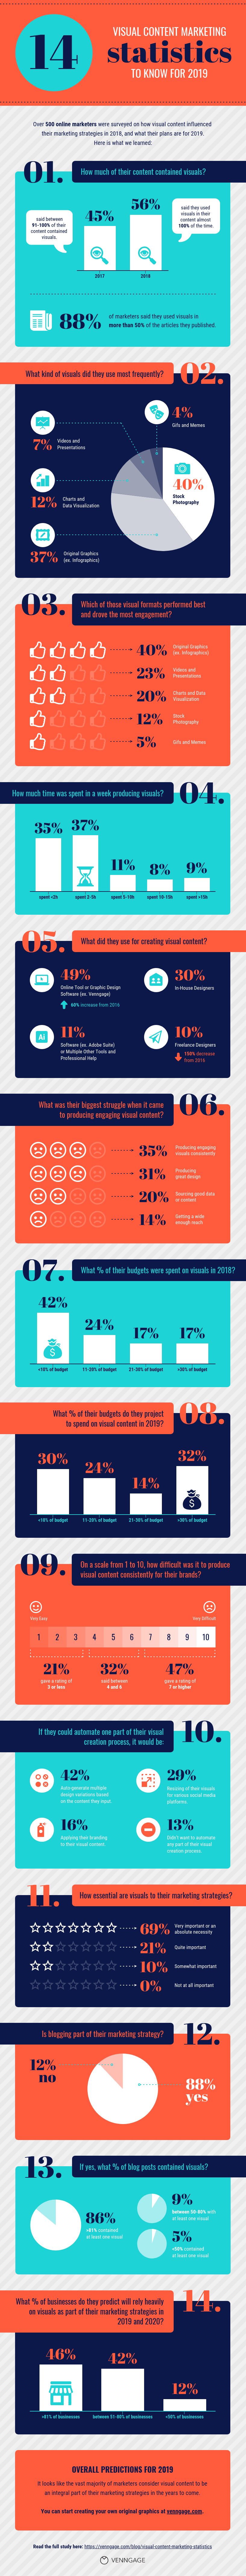 visual content marketing statistics